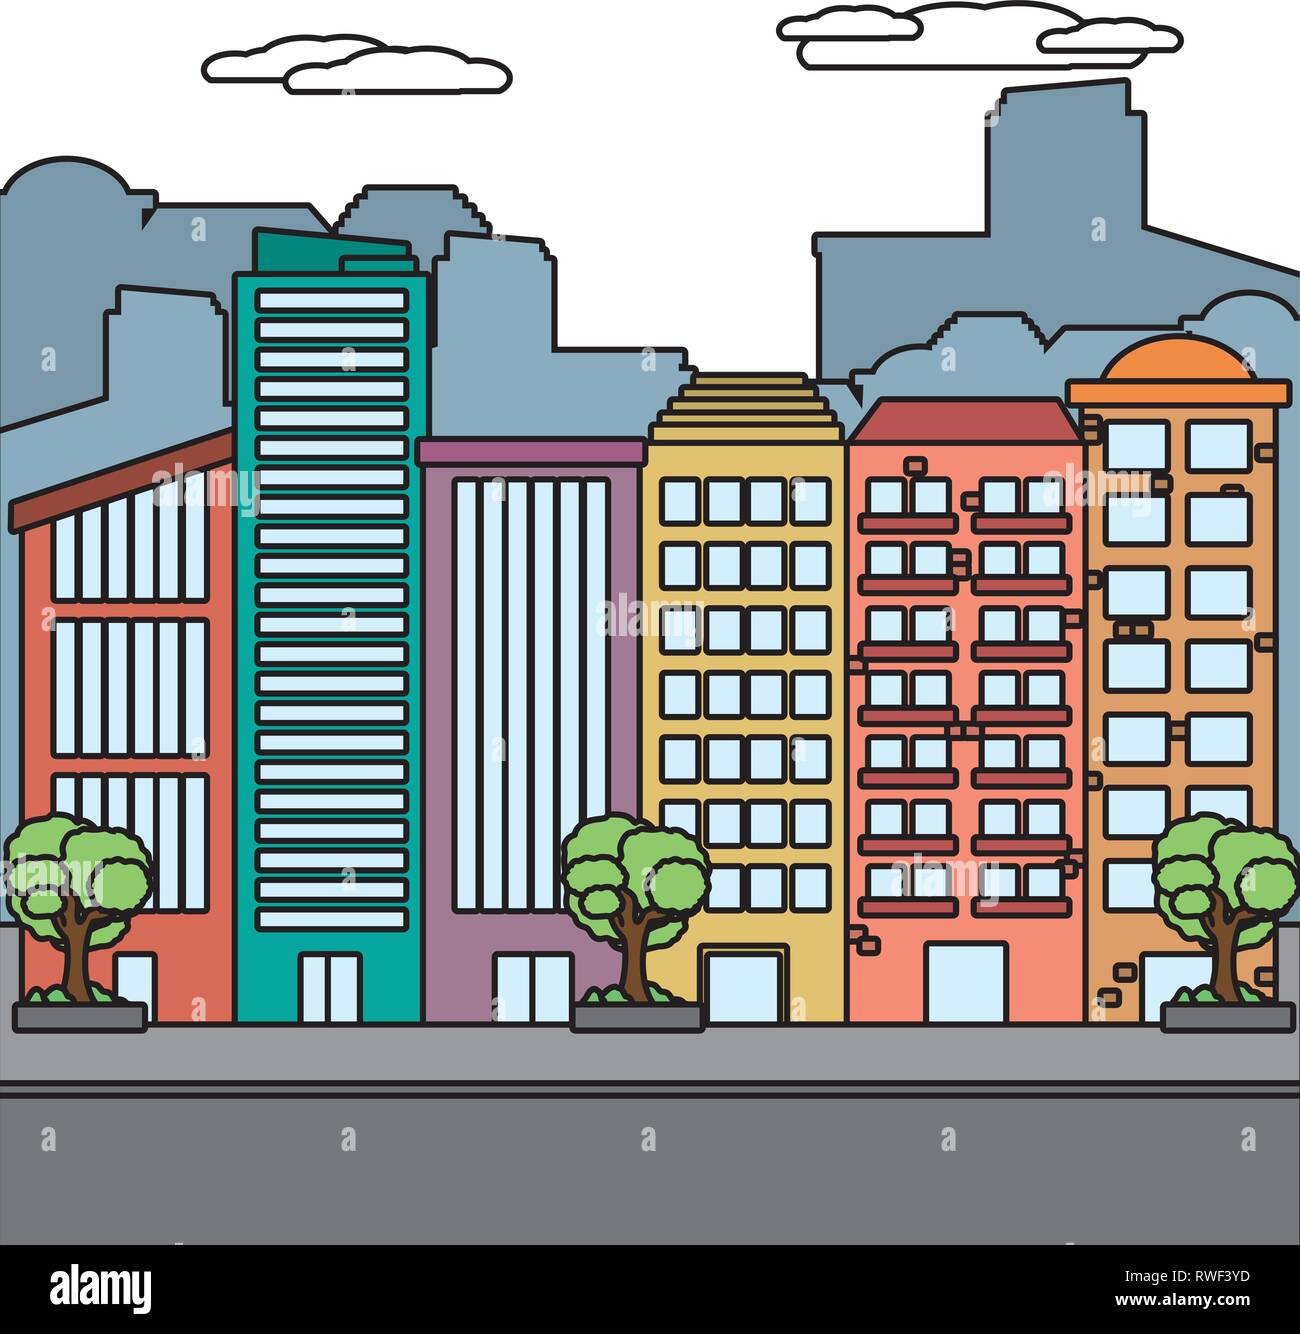 urban buildings cartoon Stock Vector